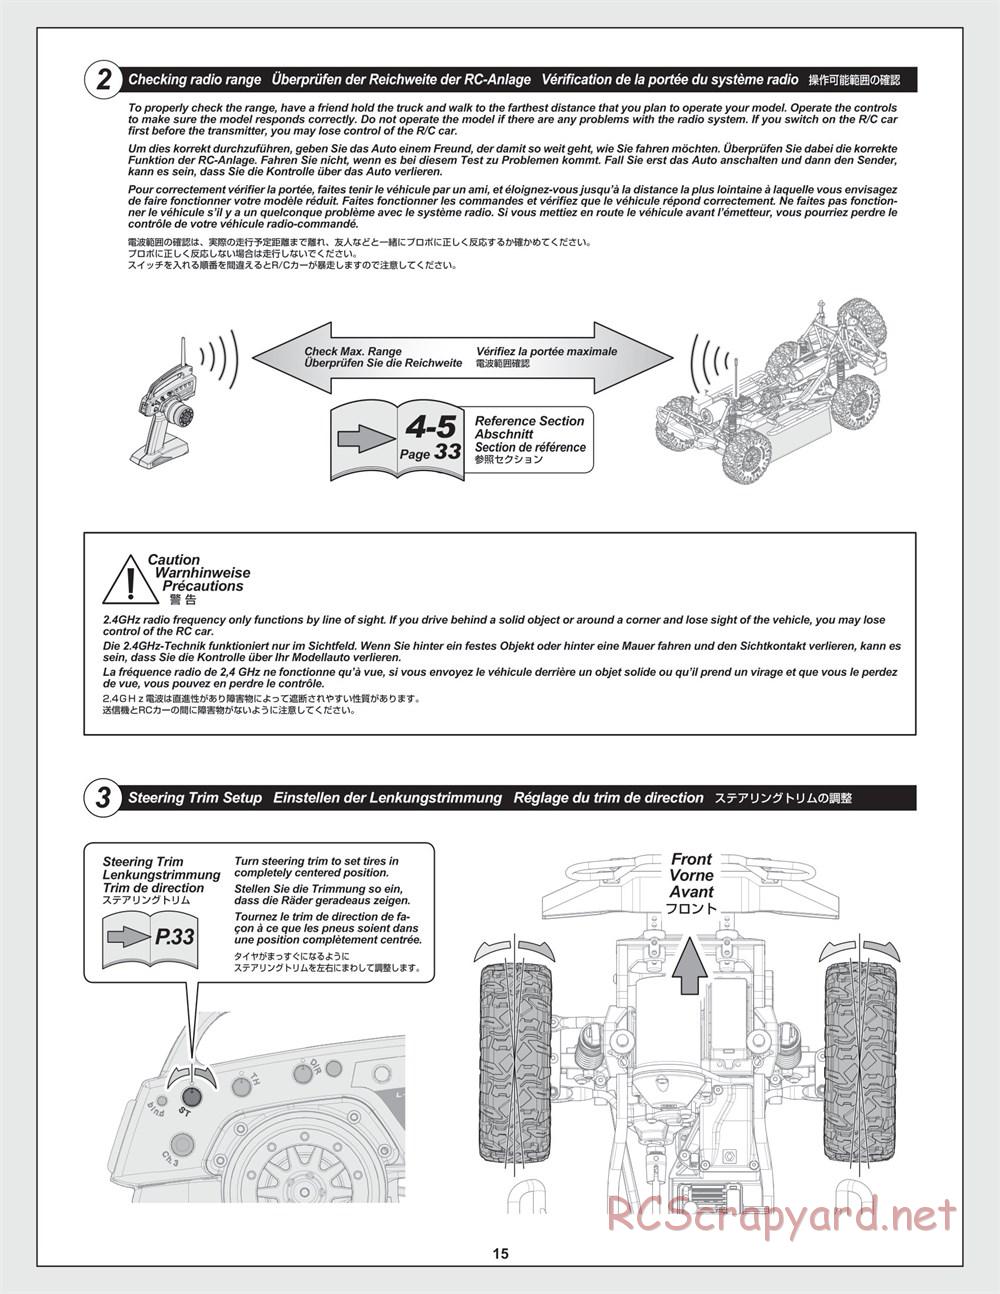 HPI - Venture Crawler - Manual - Page 15